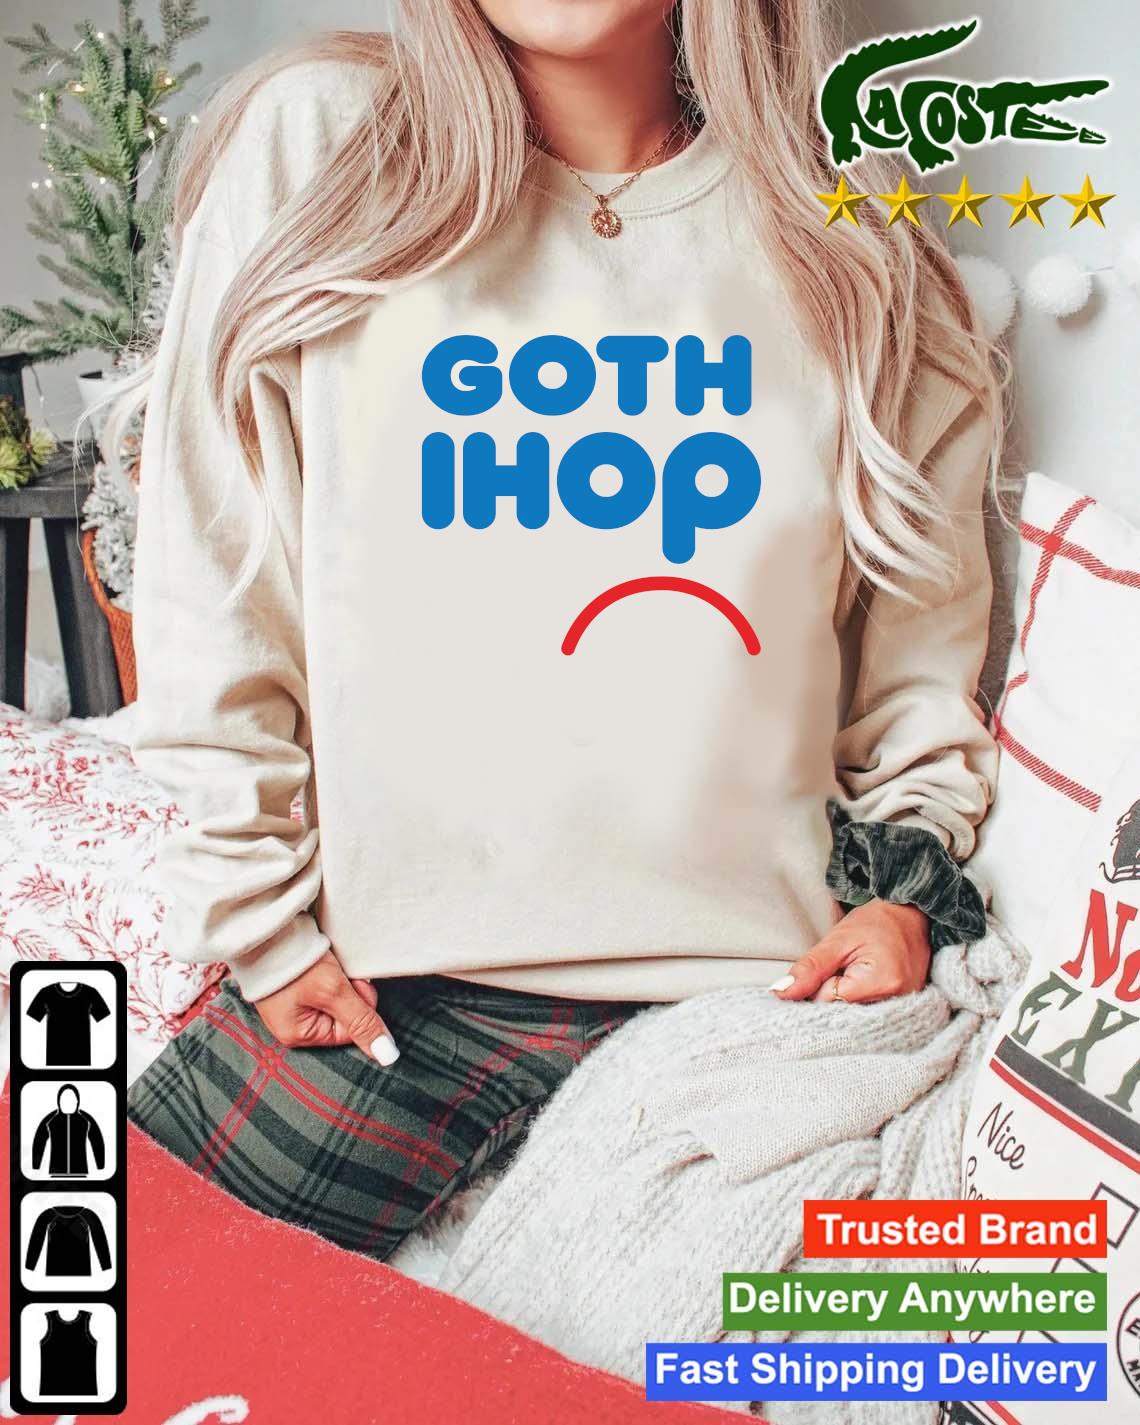 Original Gatormir Goth Ihop Sweats Mockup Sweater